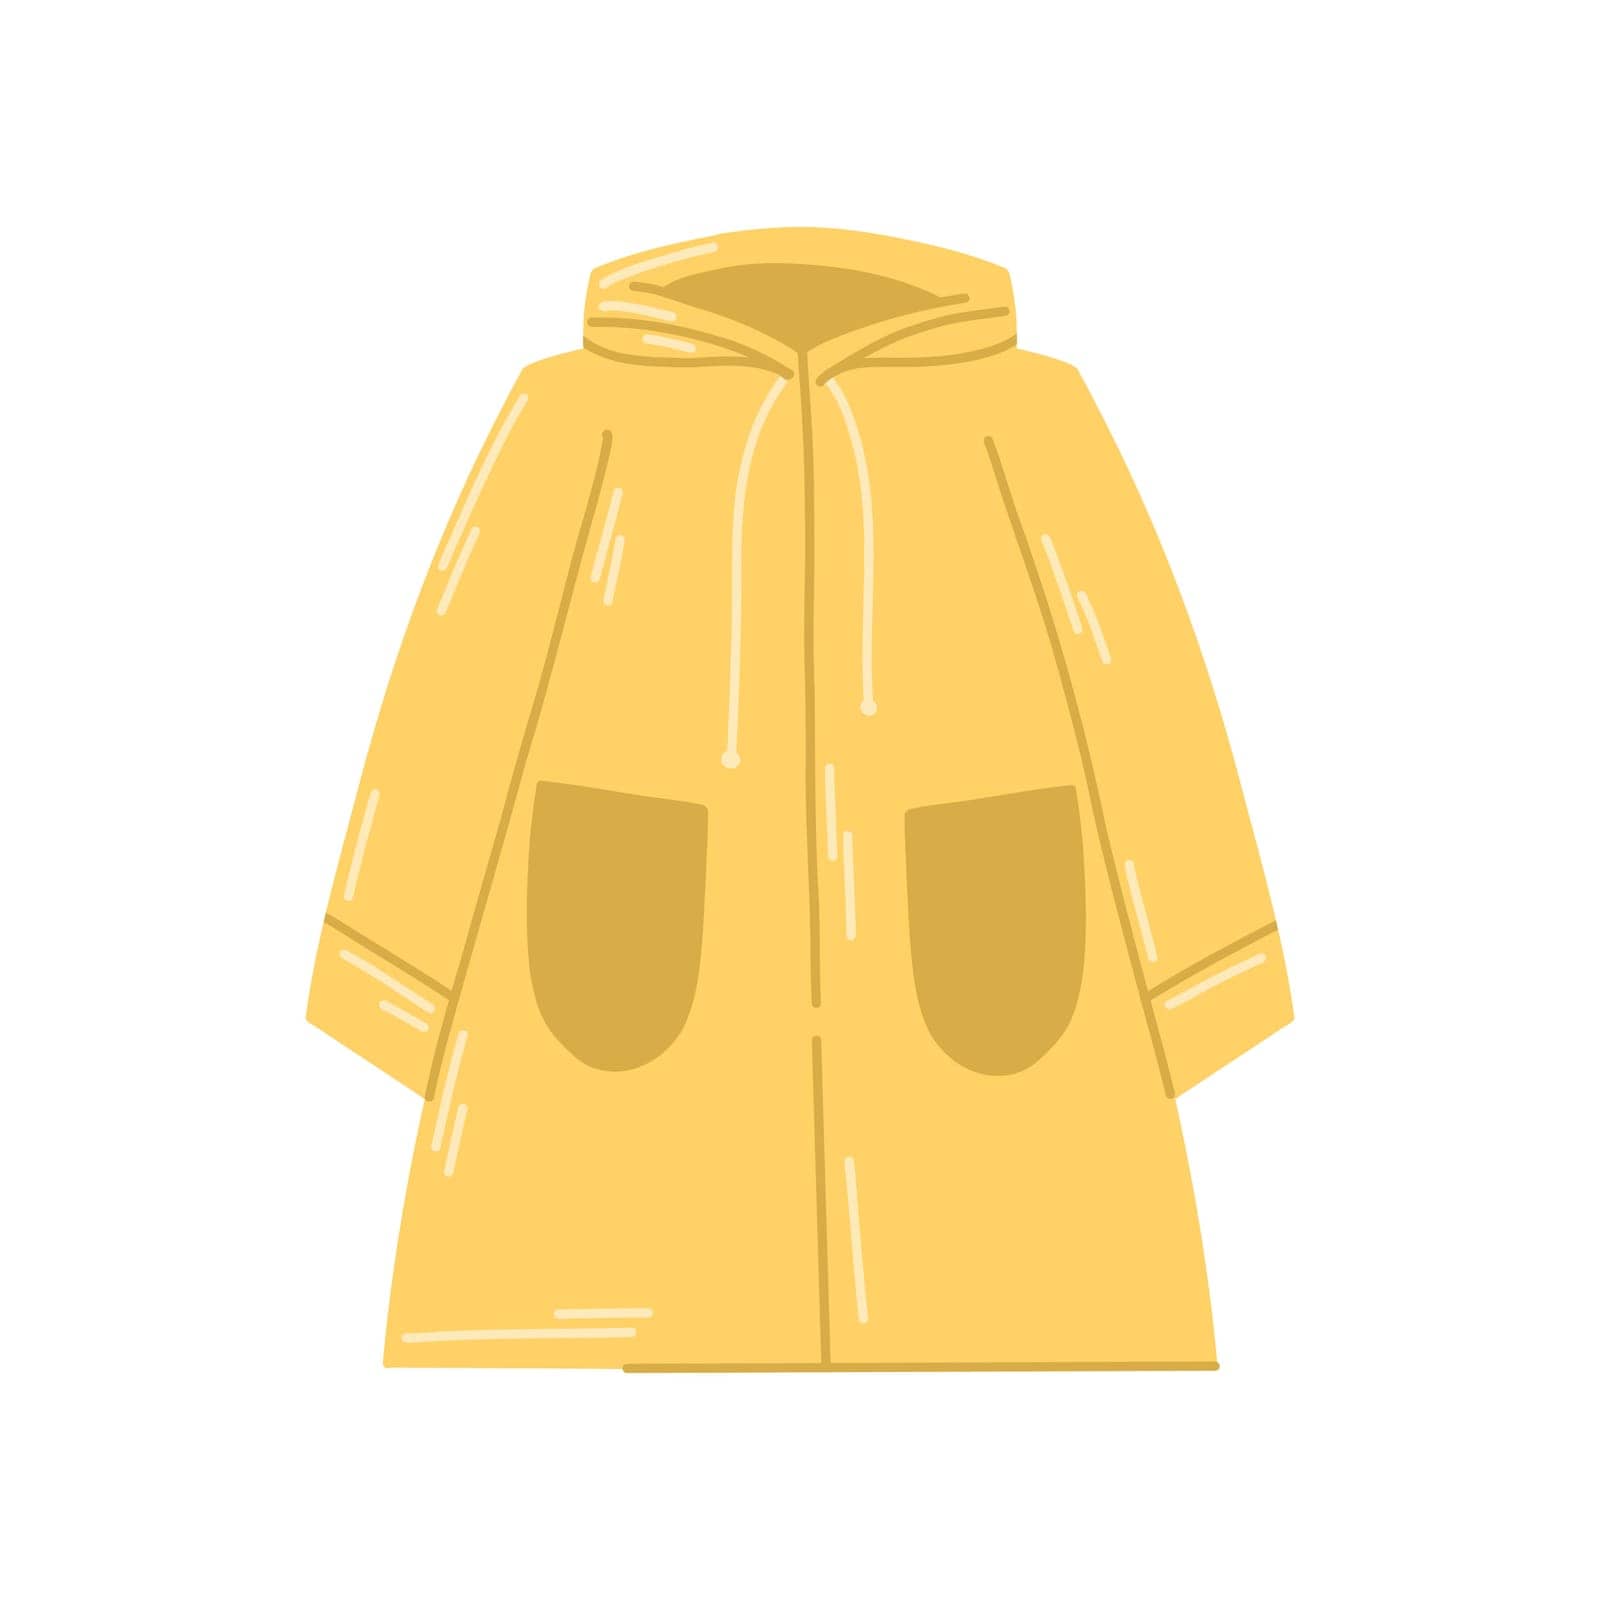 Yellow waterproof raincoat. Coat vector illustration isolated on white background by Senaysky